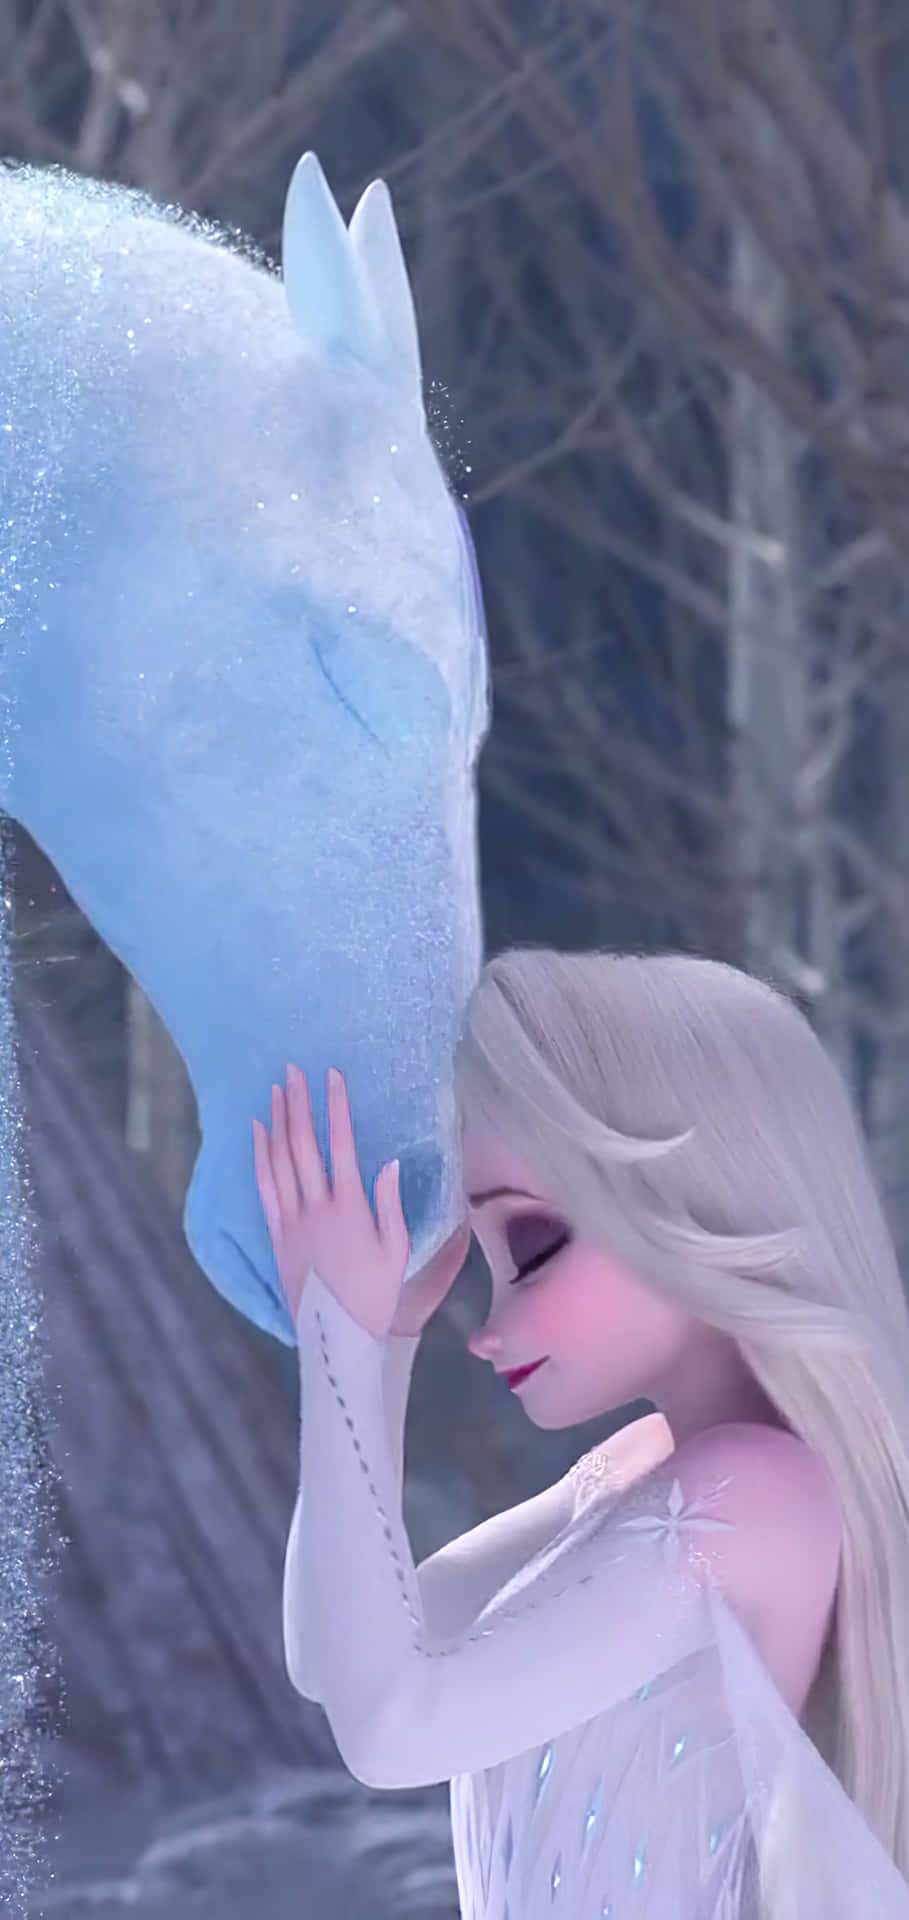 Unaragazza Sta Baciando Un Cavallo In Disney Frozen Sfondo